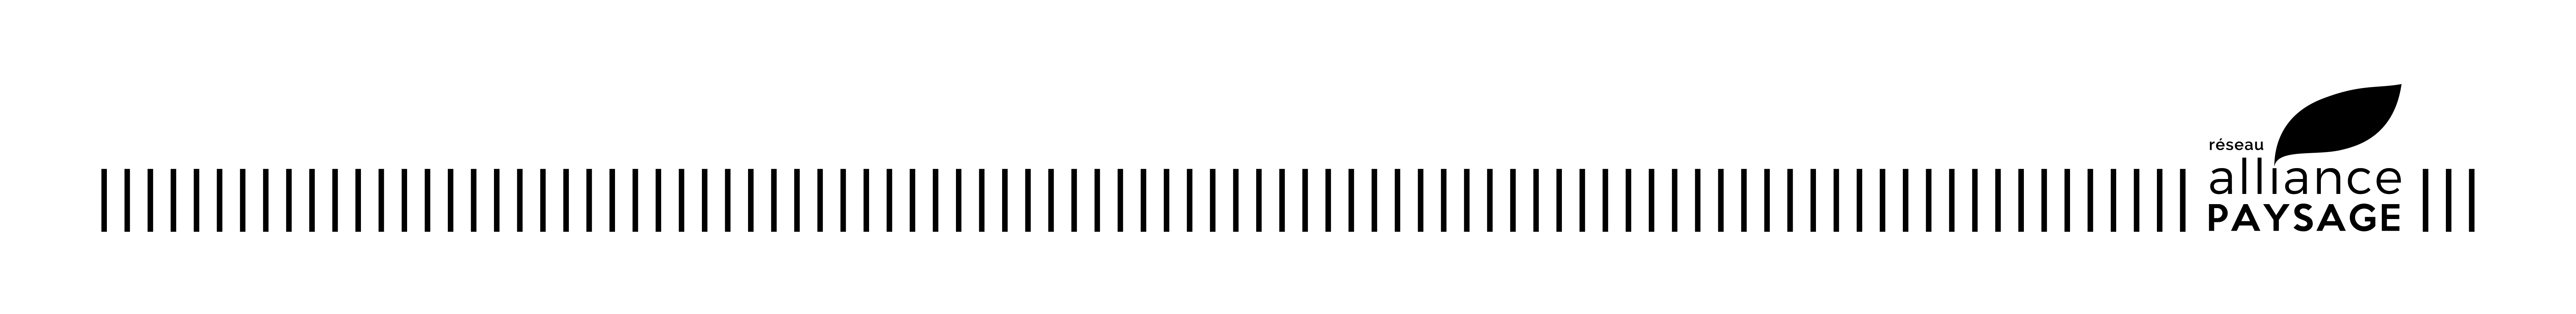 Logo Alliance Paysage noir long